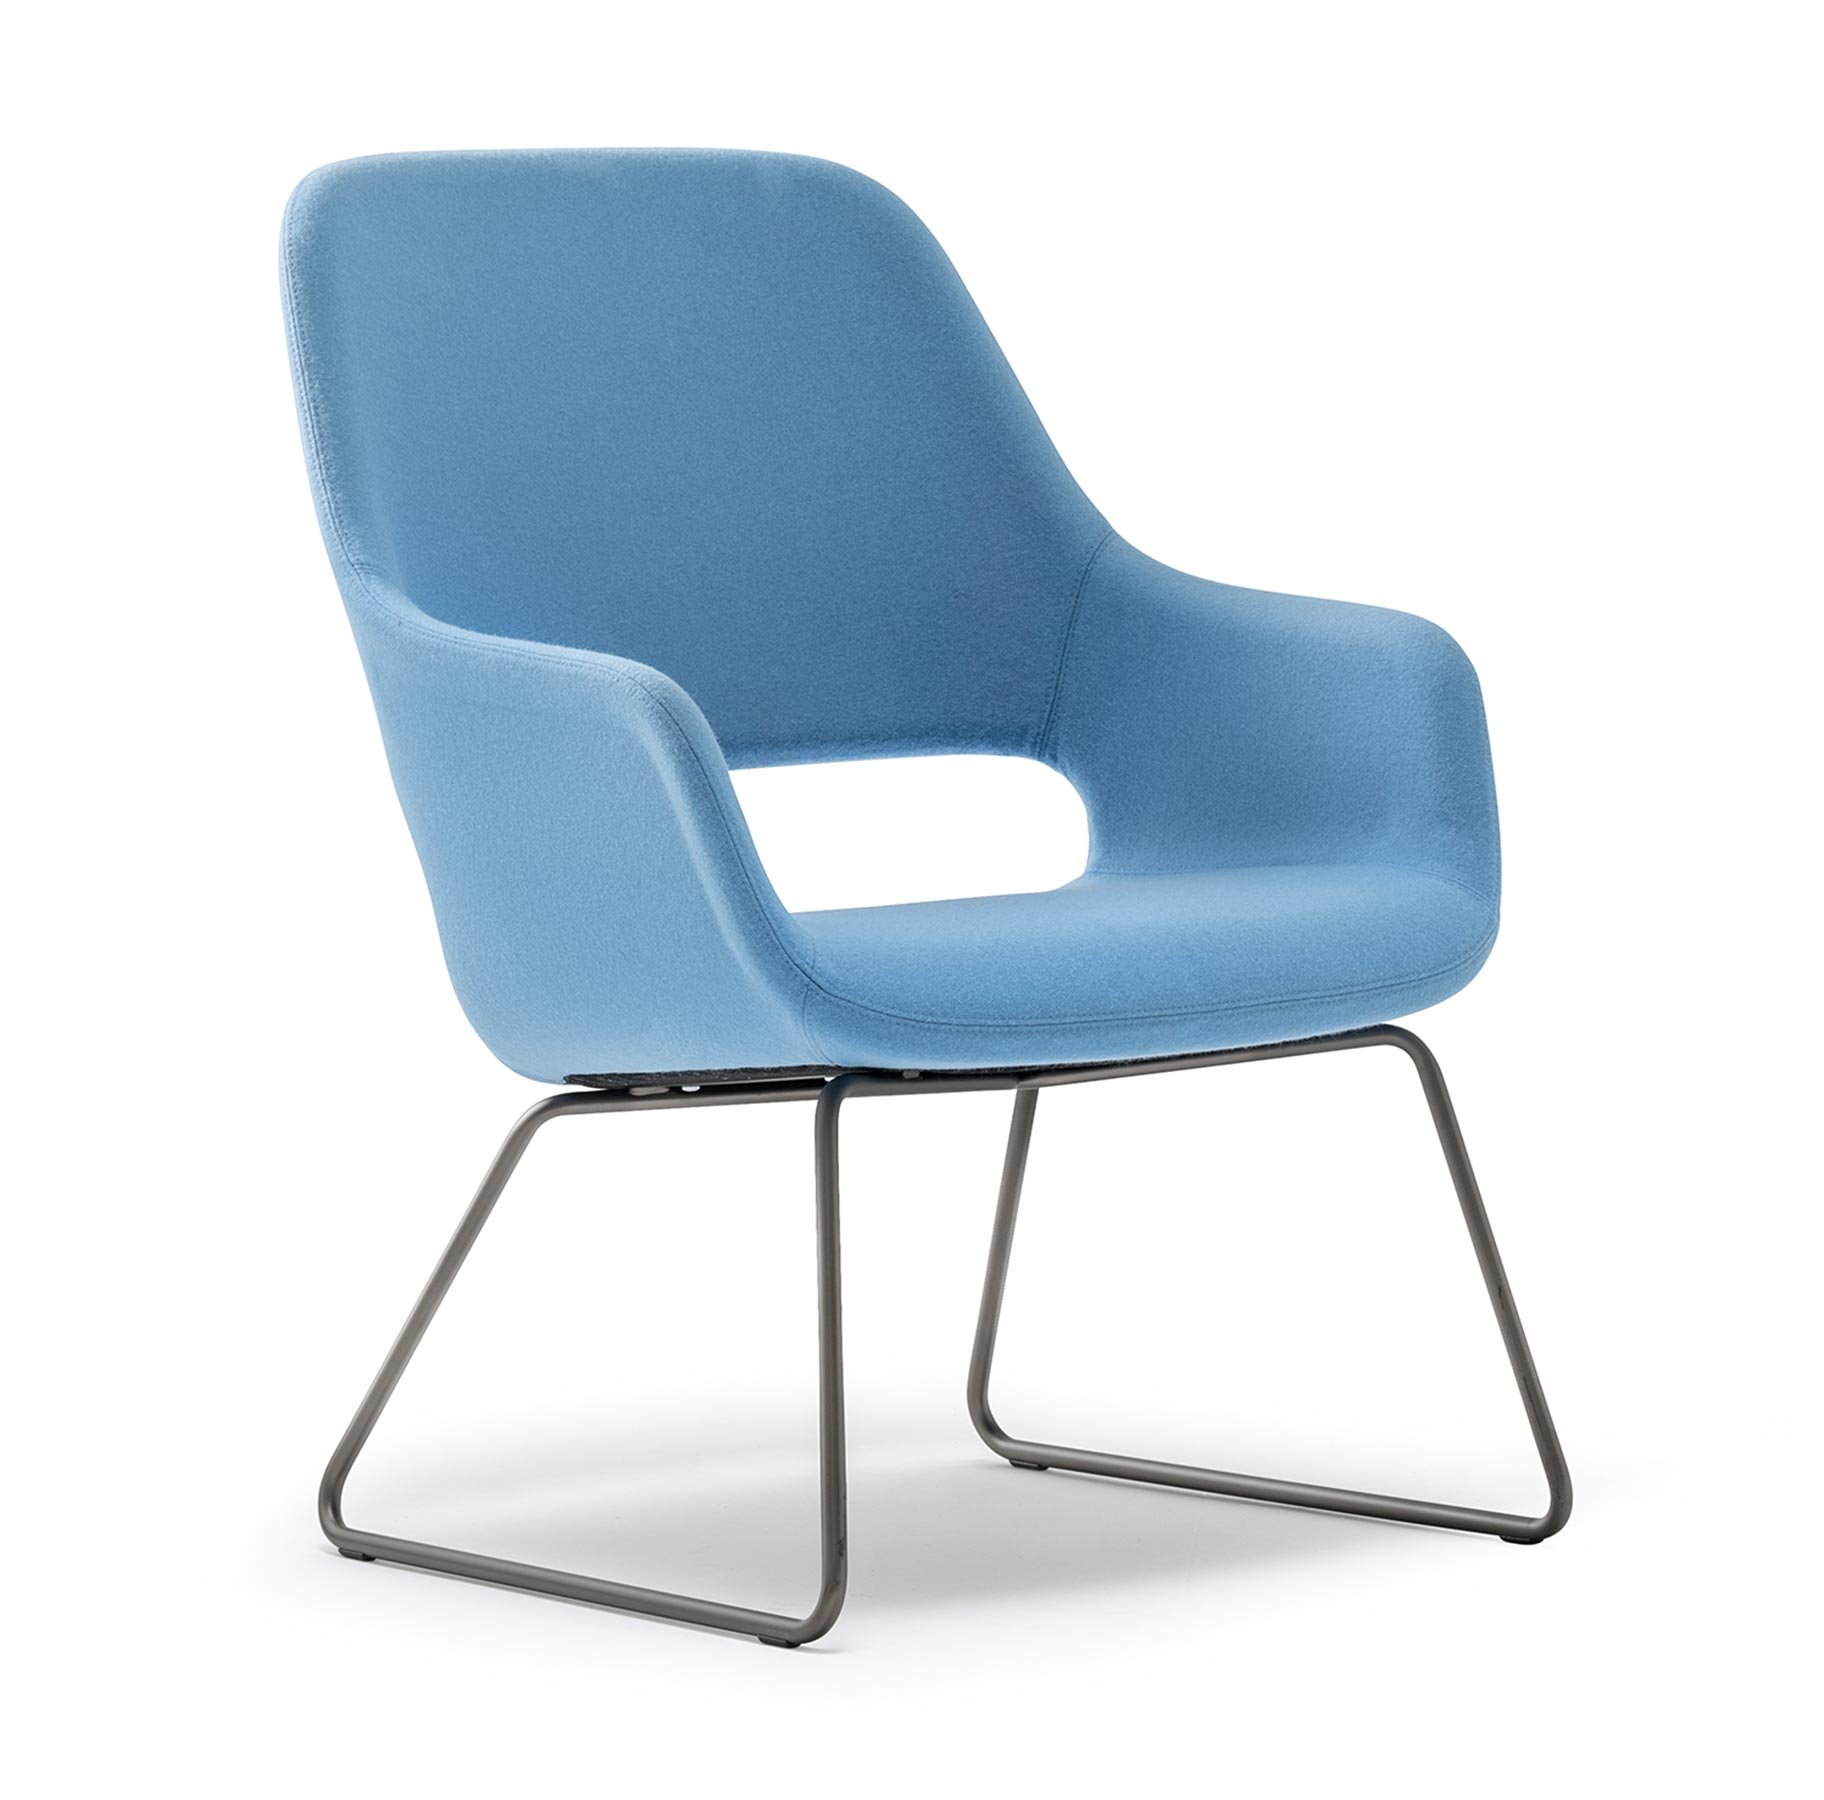 Babila Comfort Chair lounge from Pedrali, designed by Odoardo Fioravanti